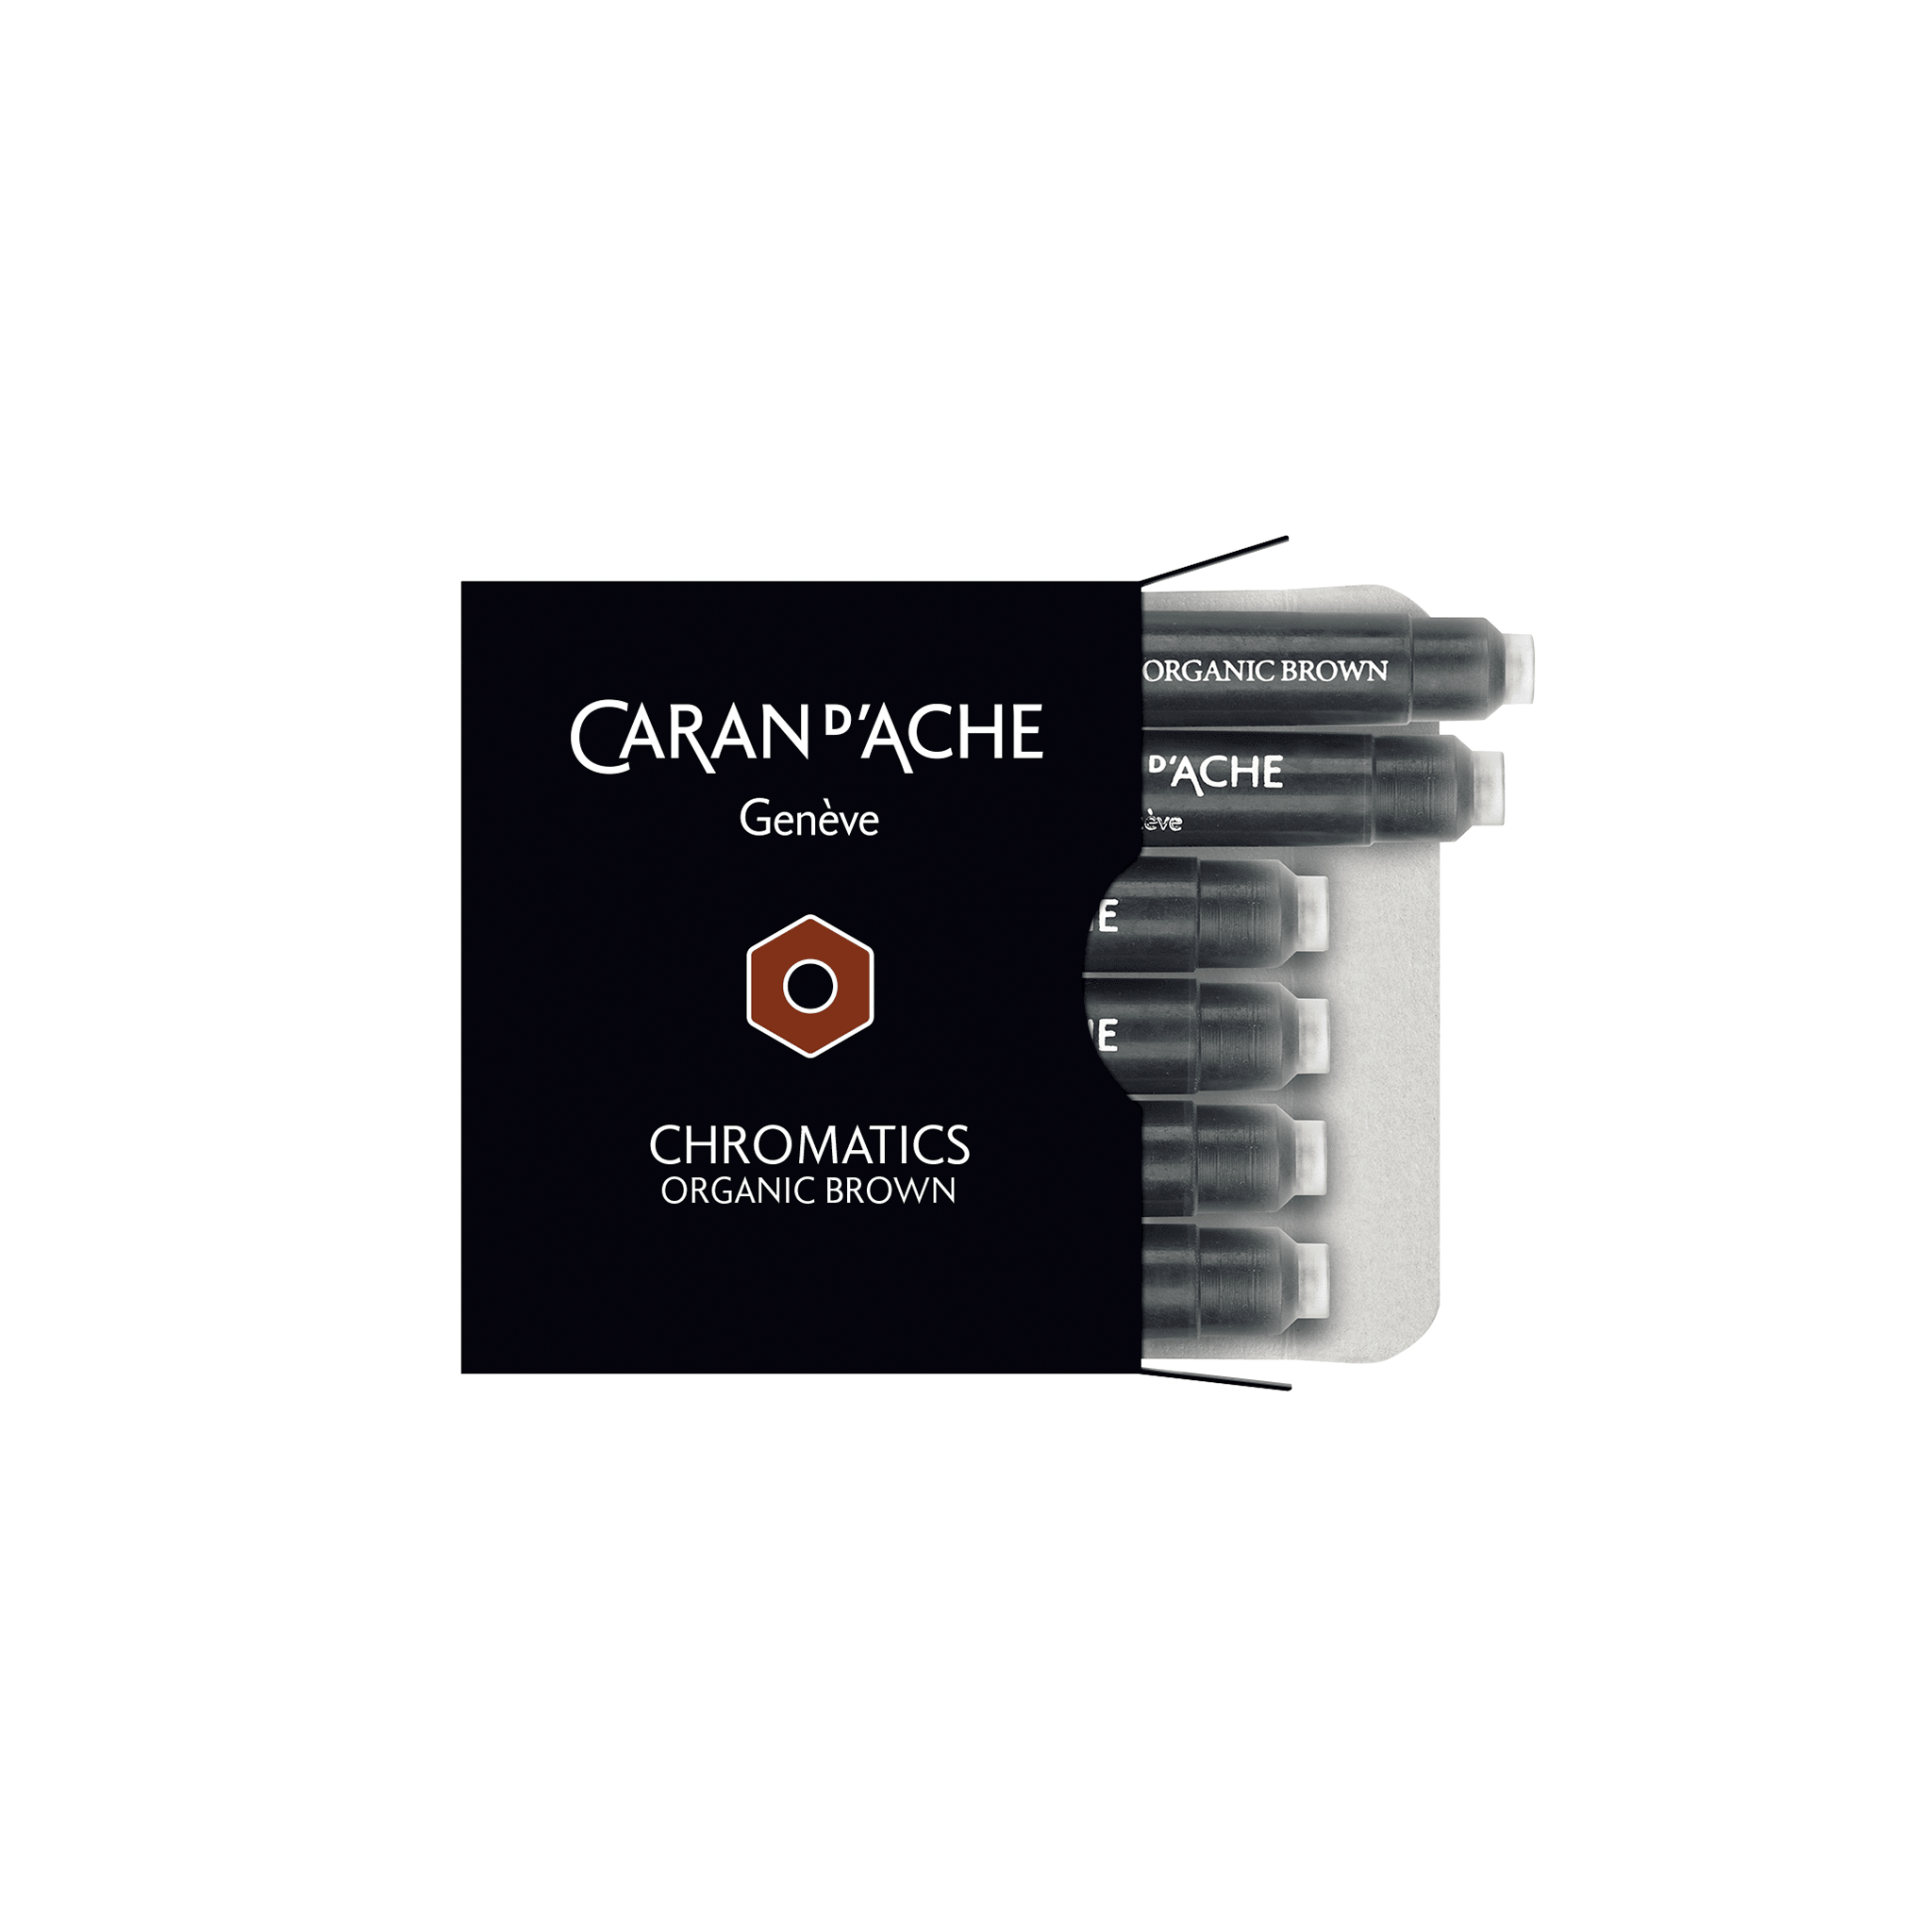 Caran d'Ache Chromatics Ink Cartridge Organic Brown - Laywine's